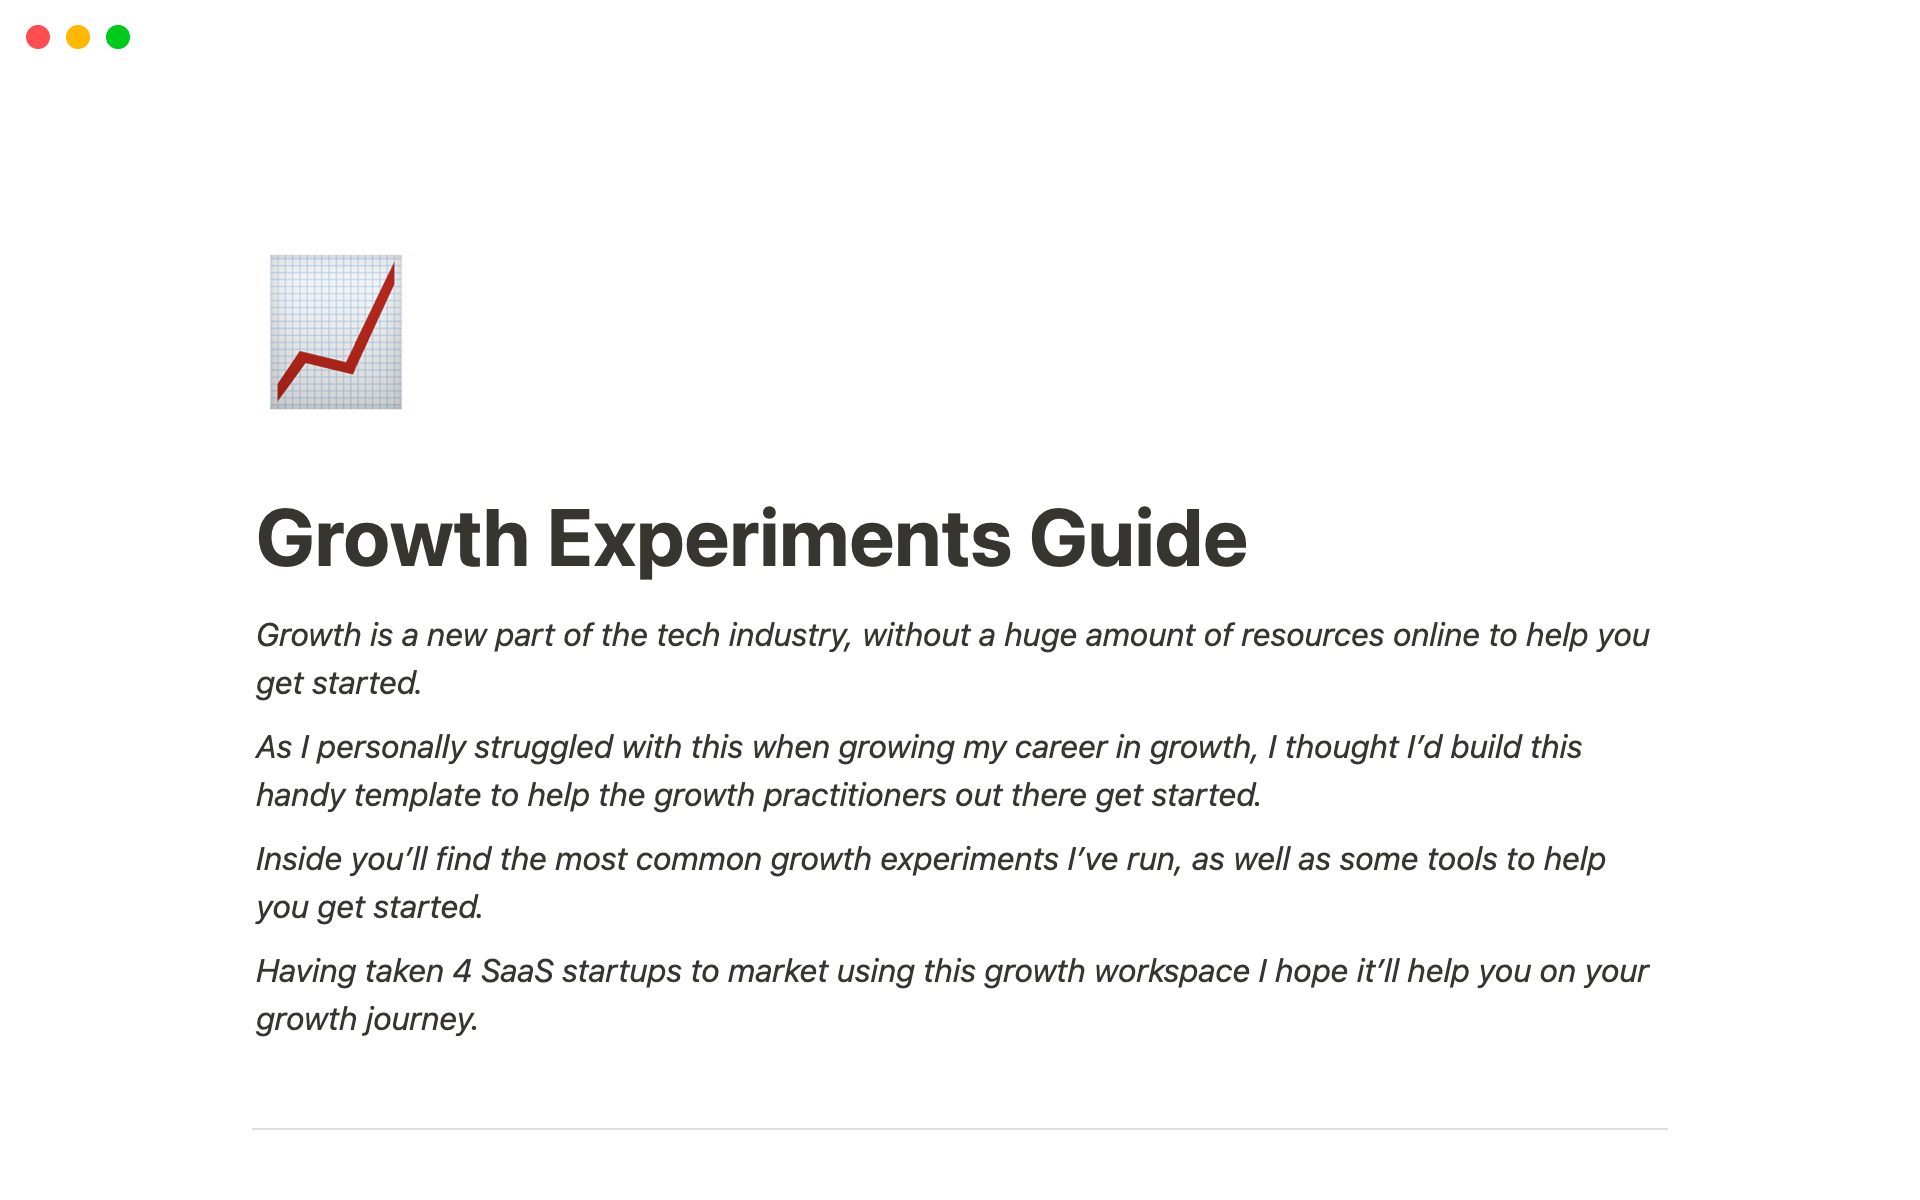 Vista previa de plantilla para Growth Experiments Guide